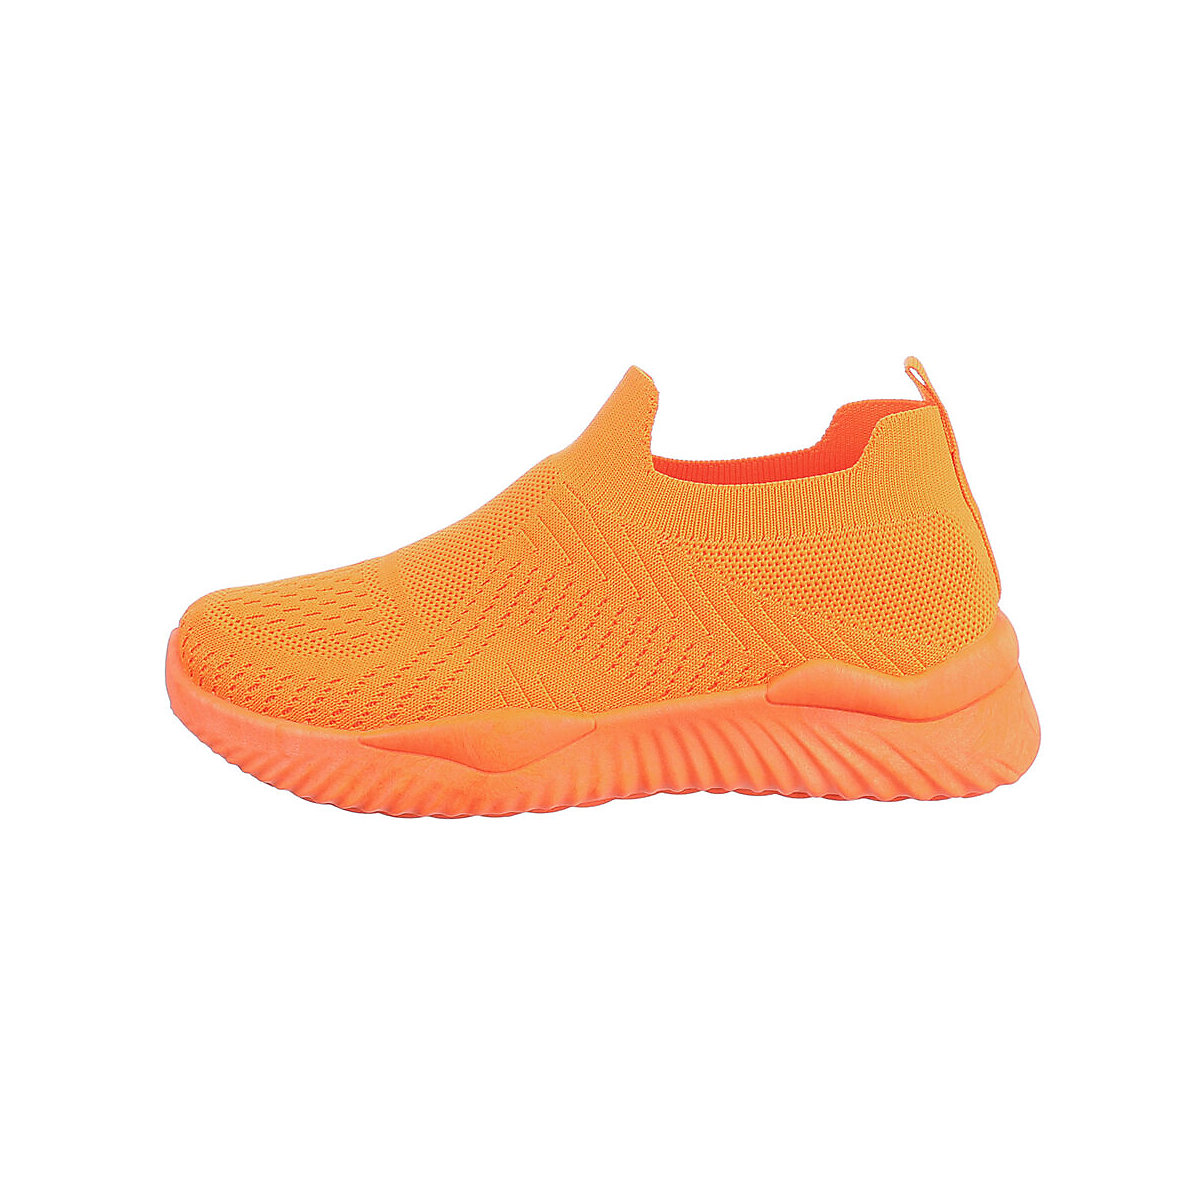 Ital-Design Slipper Flach orange